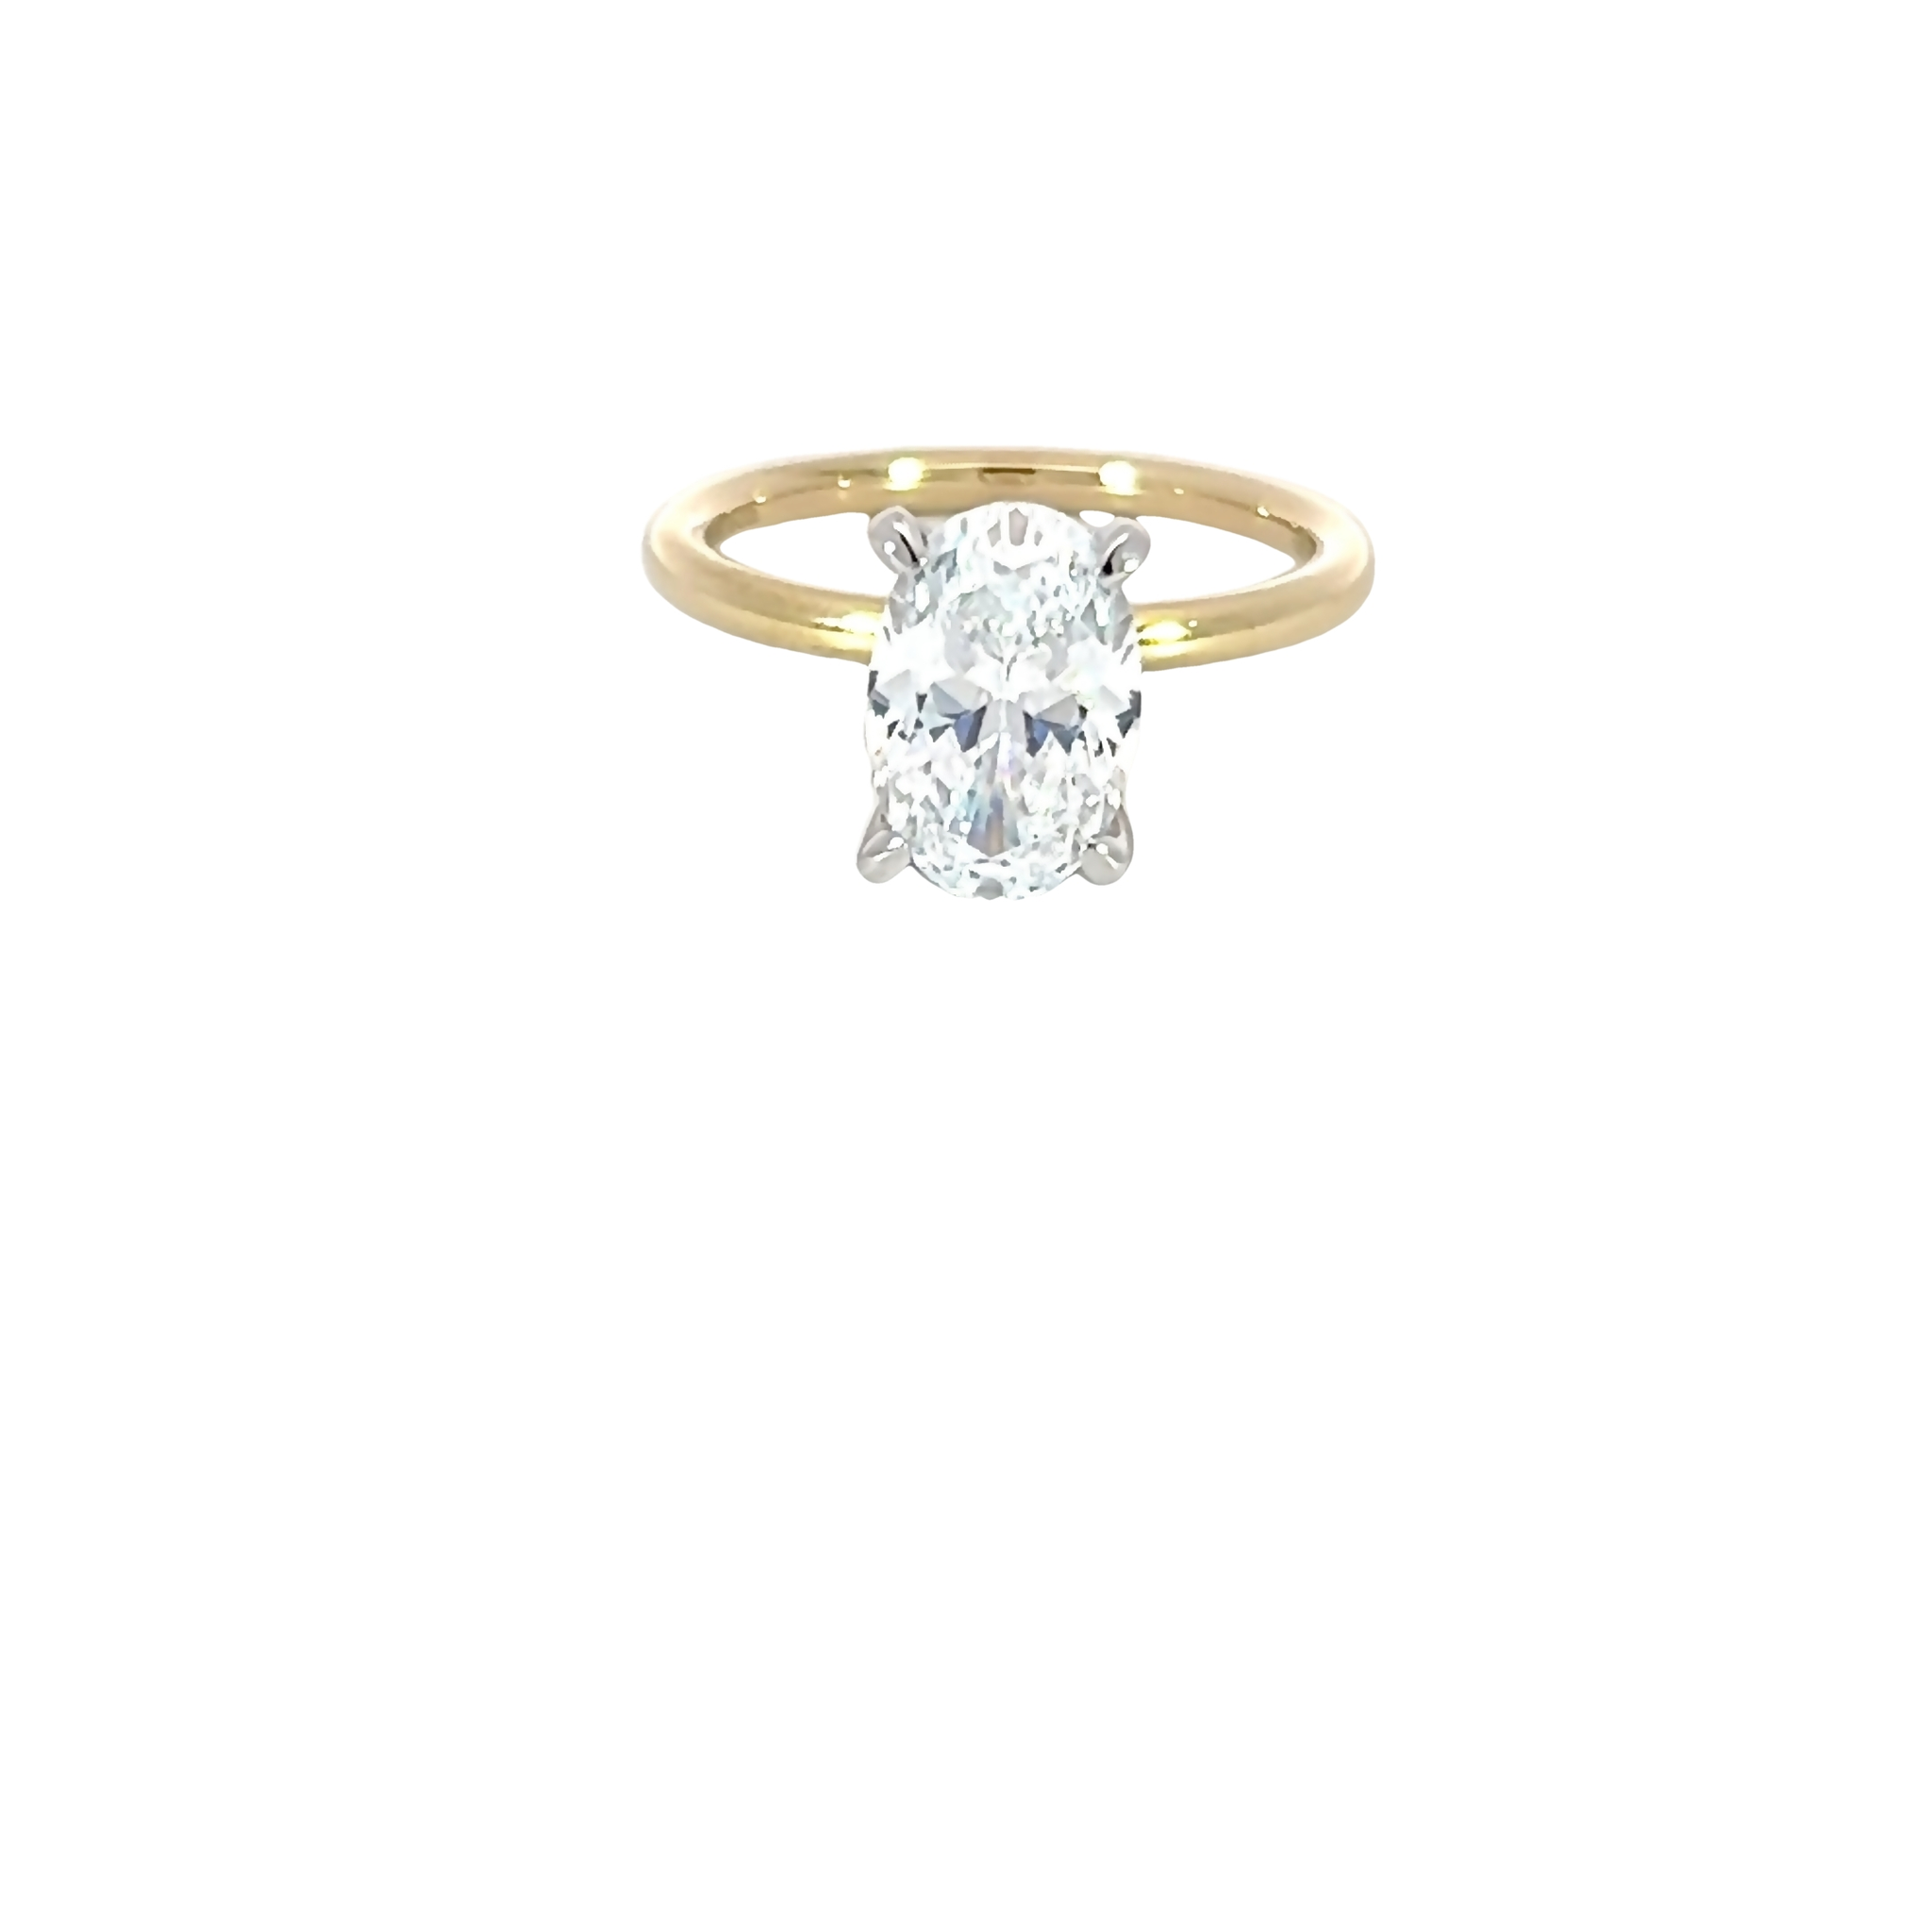 14 Karat Yellow Gold Semi Mount Engagement Ring With 18=0.07 Total Weight Round Brilliant G Vs Diamonds Set In 14 Karat White Gold. Size 6.5